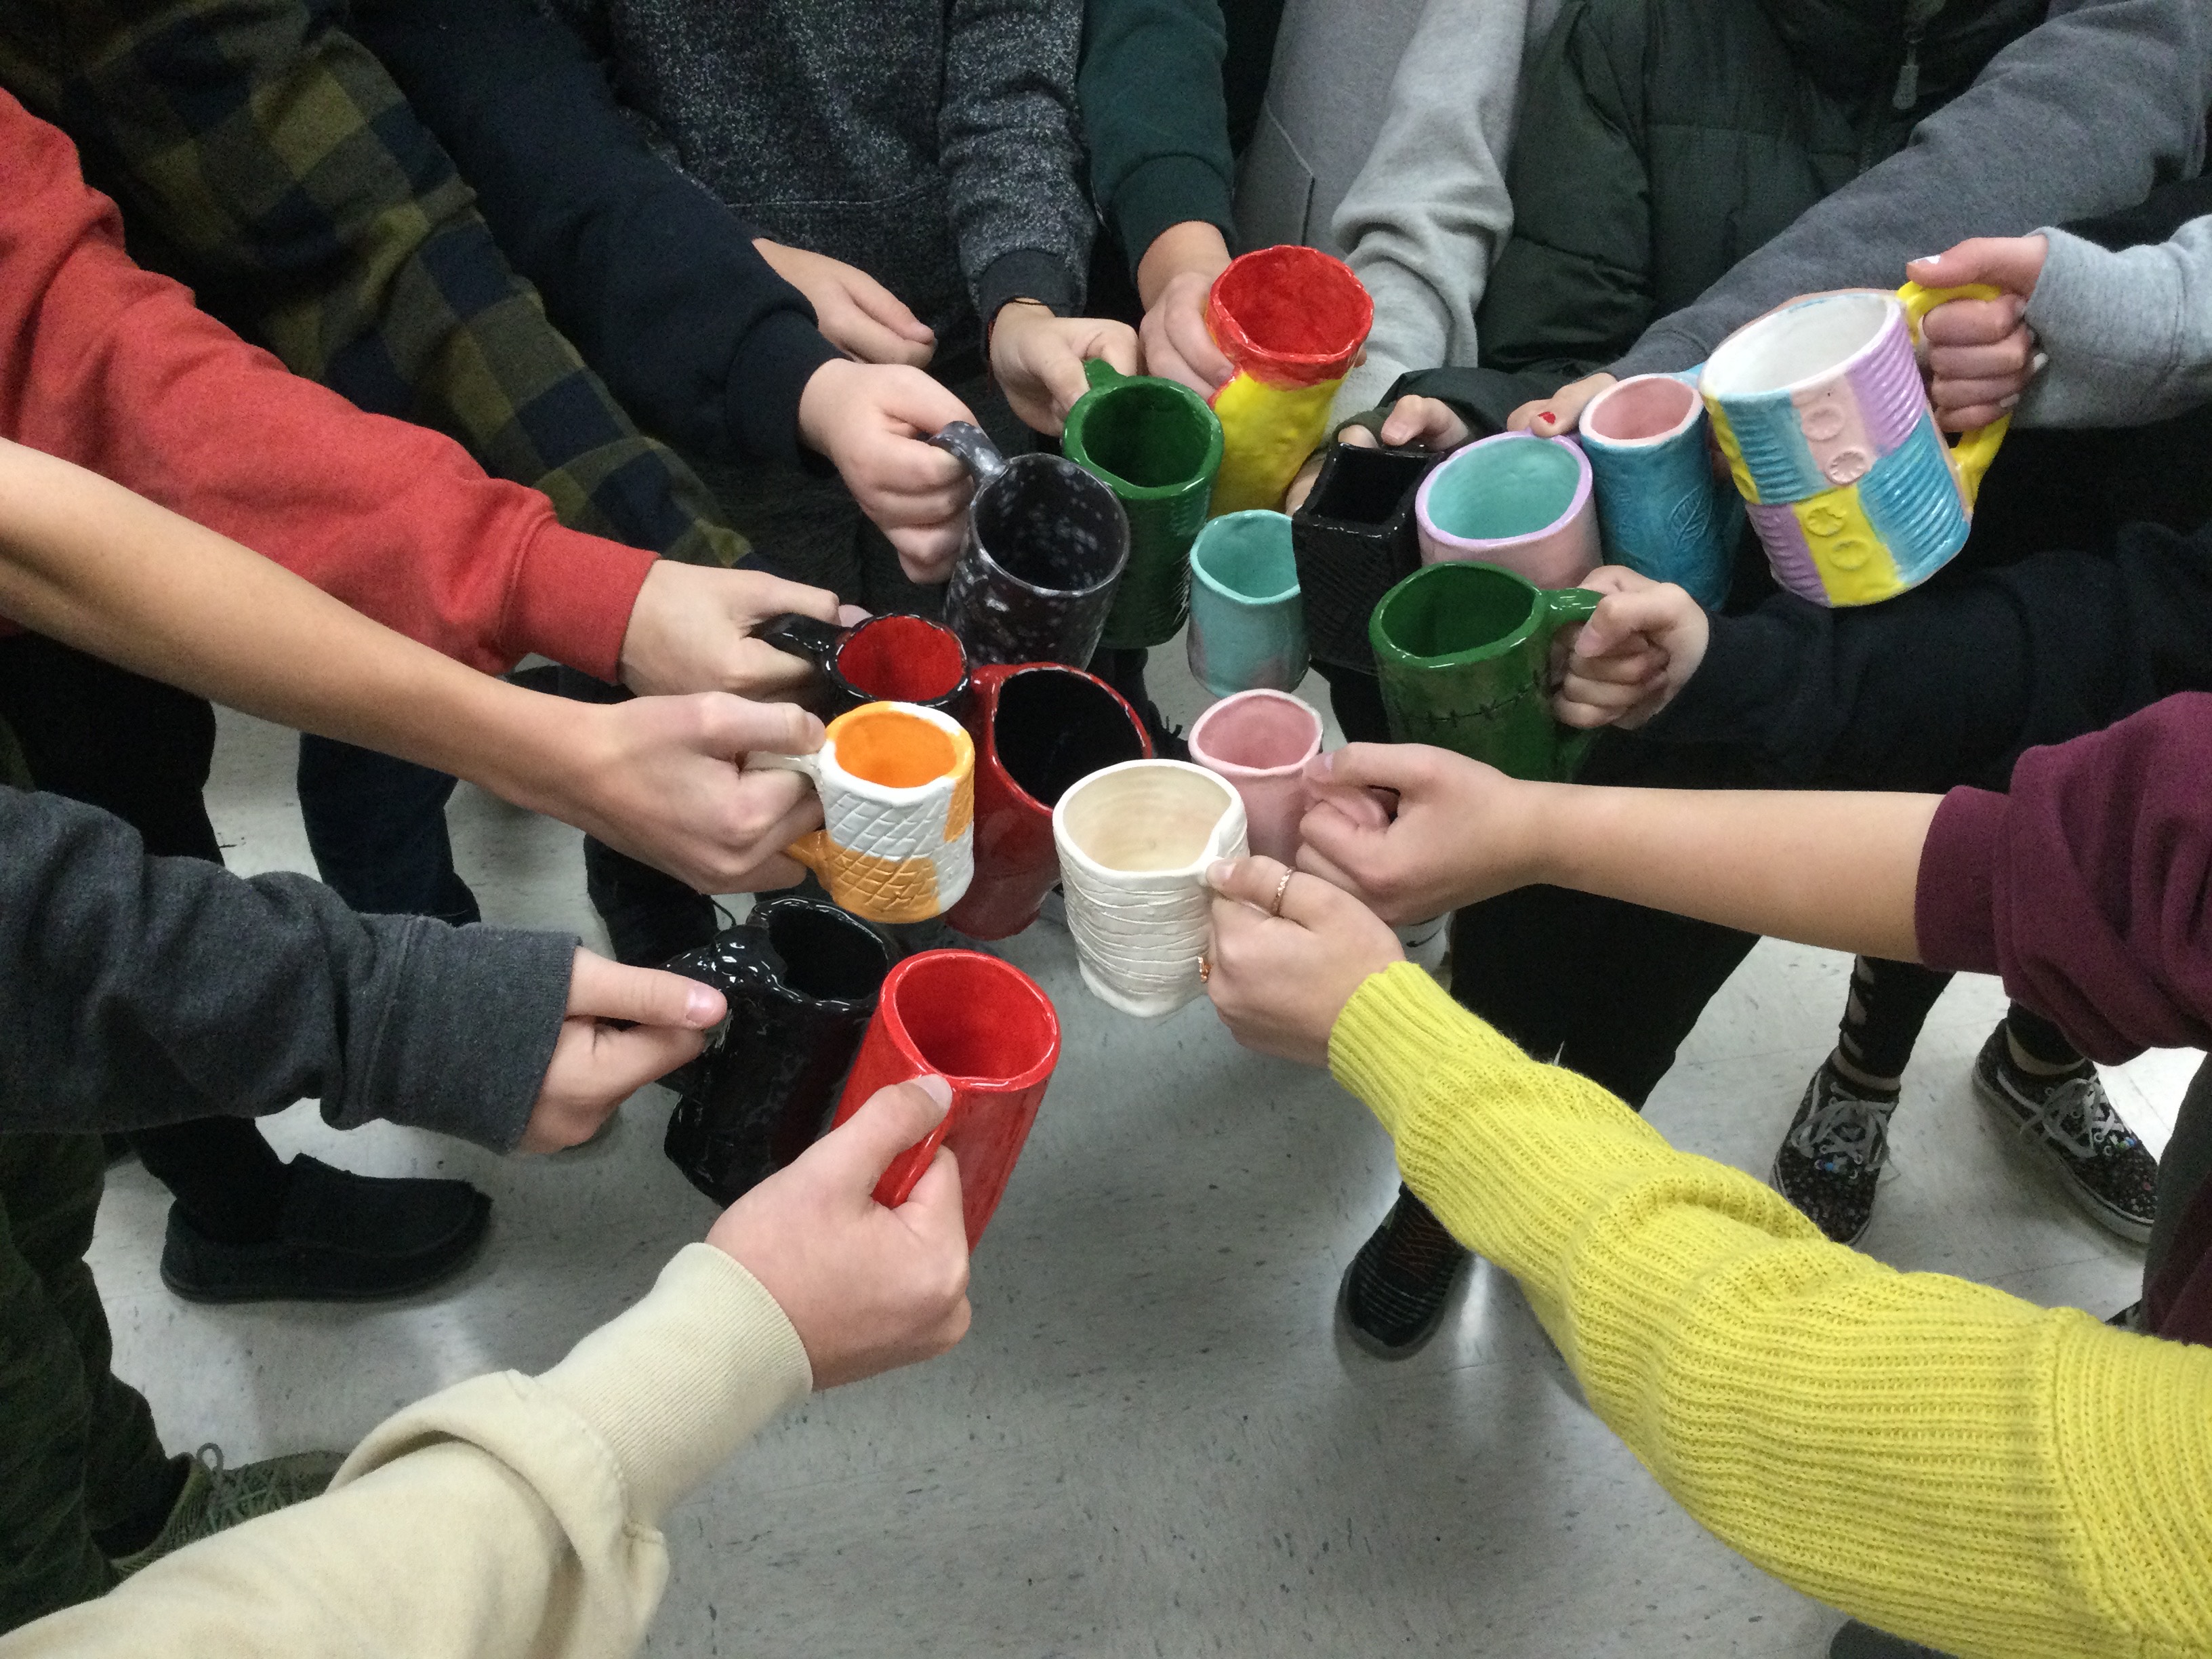 Students making a pinwheel showing off their mugs.